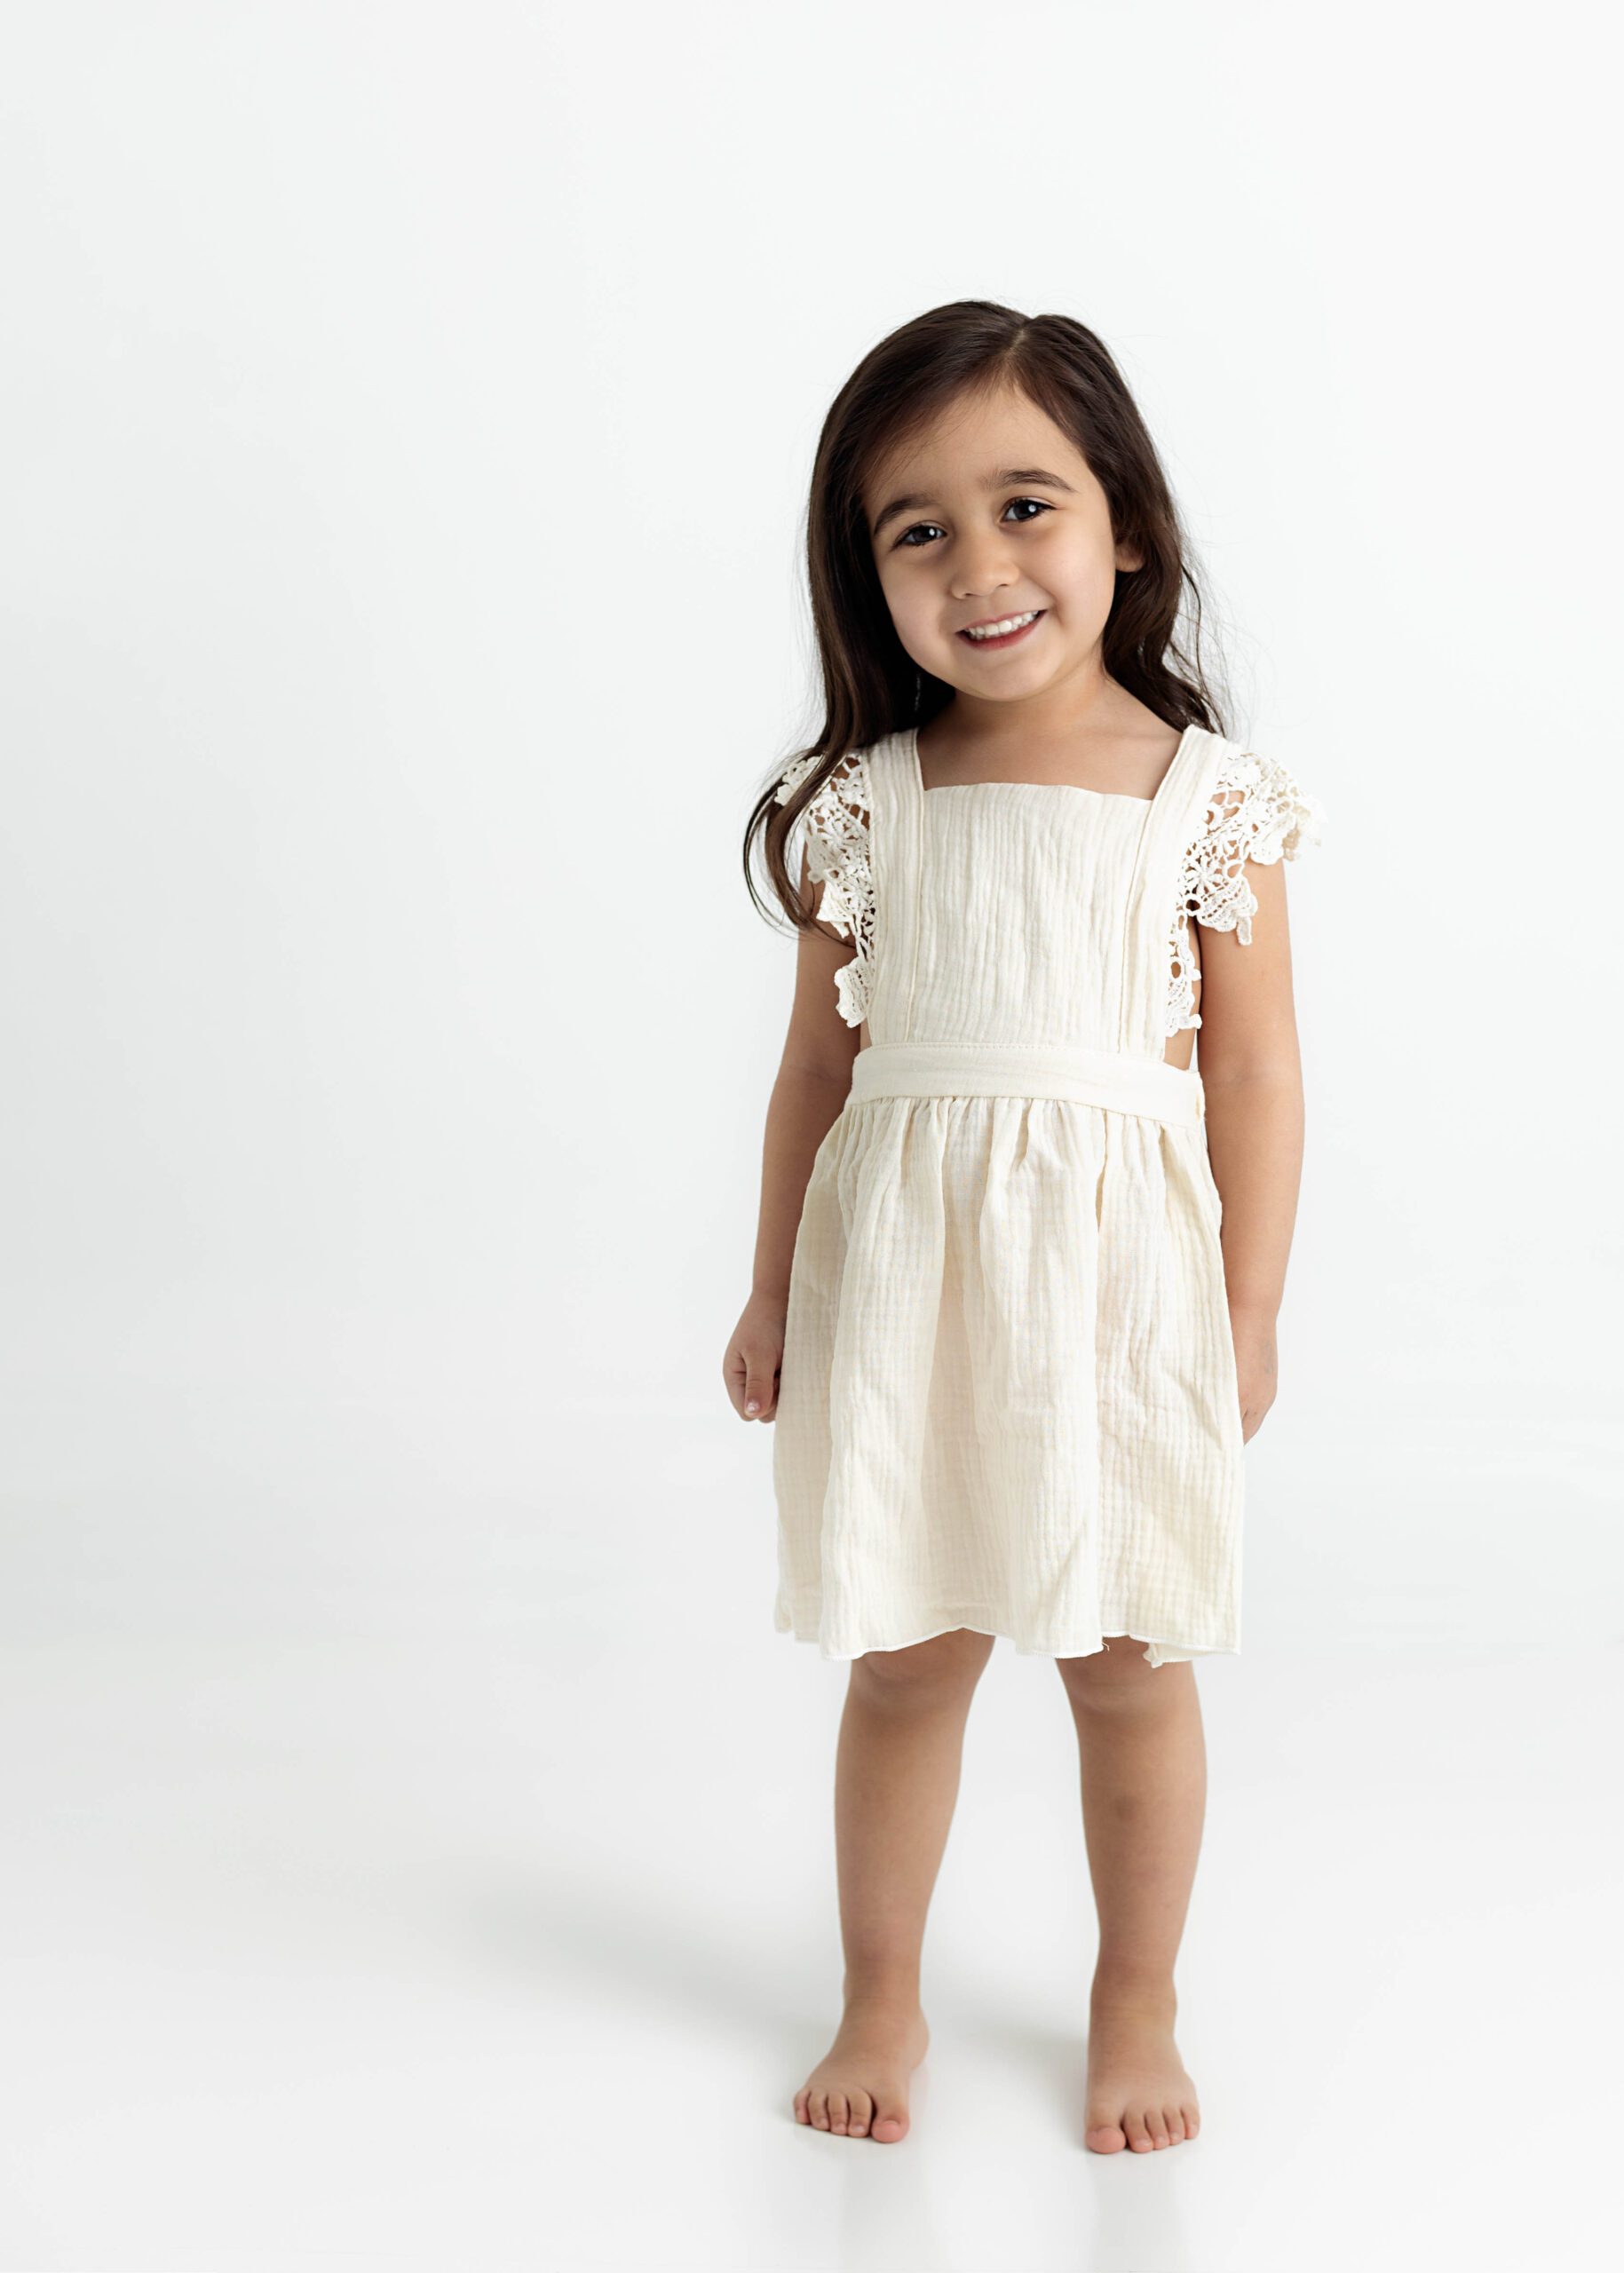 Little girl in white dress bashfully smiling for Dallas baby photographer